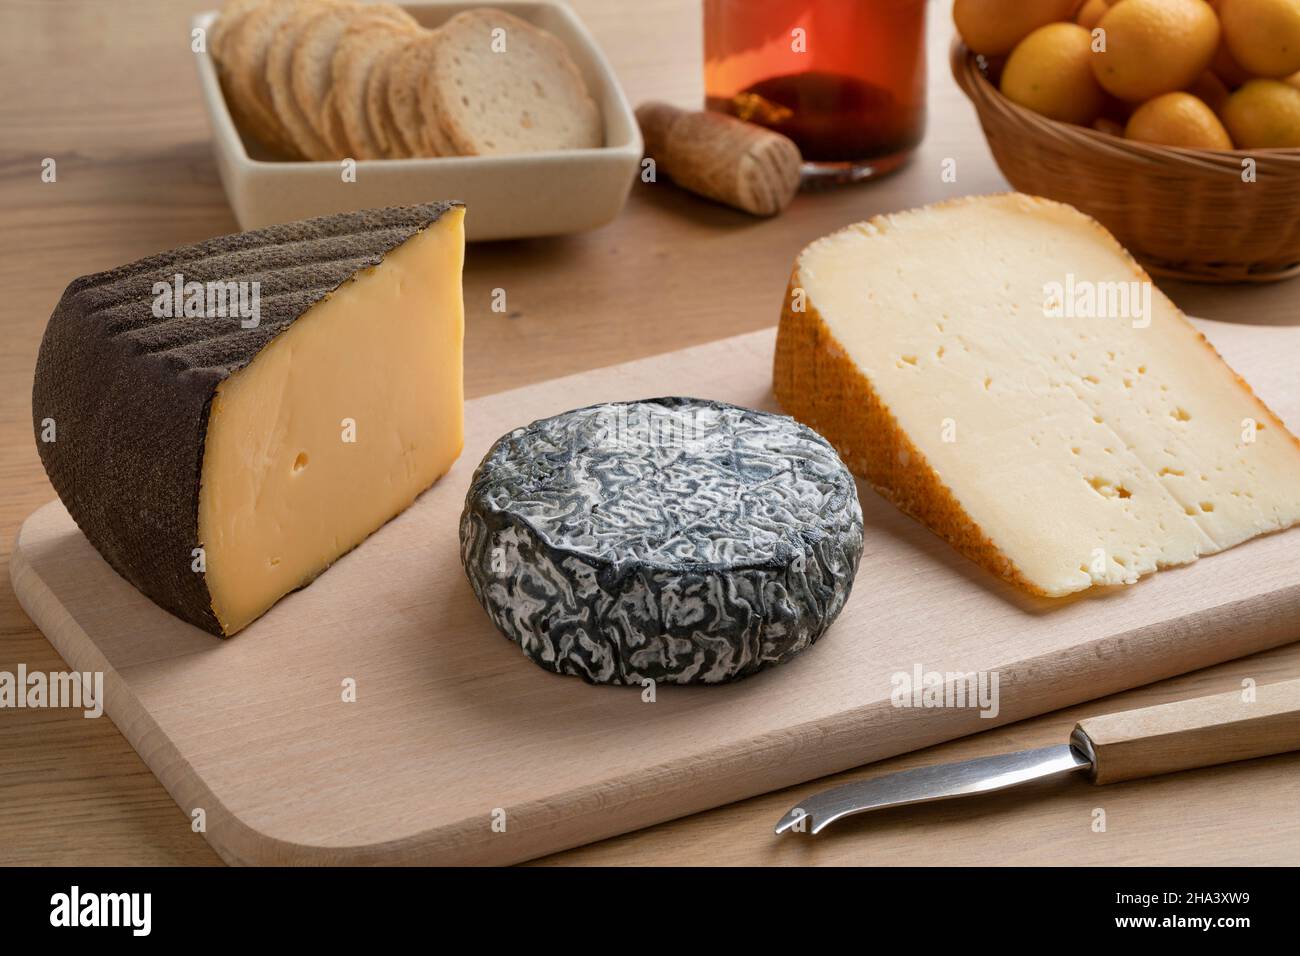 Plato de queso francés con tres tipos diferentes de queso como postre Foto de stock